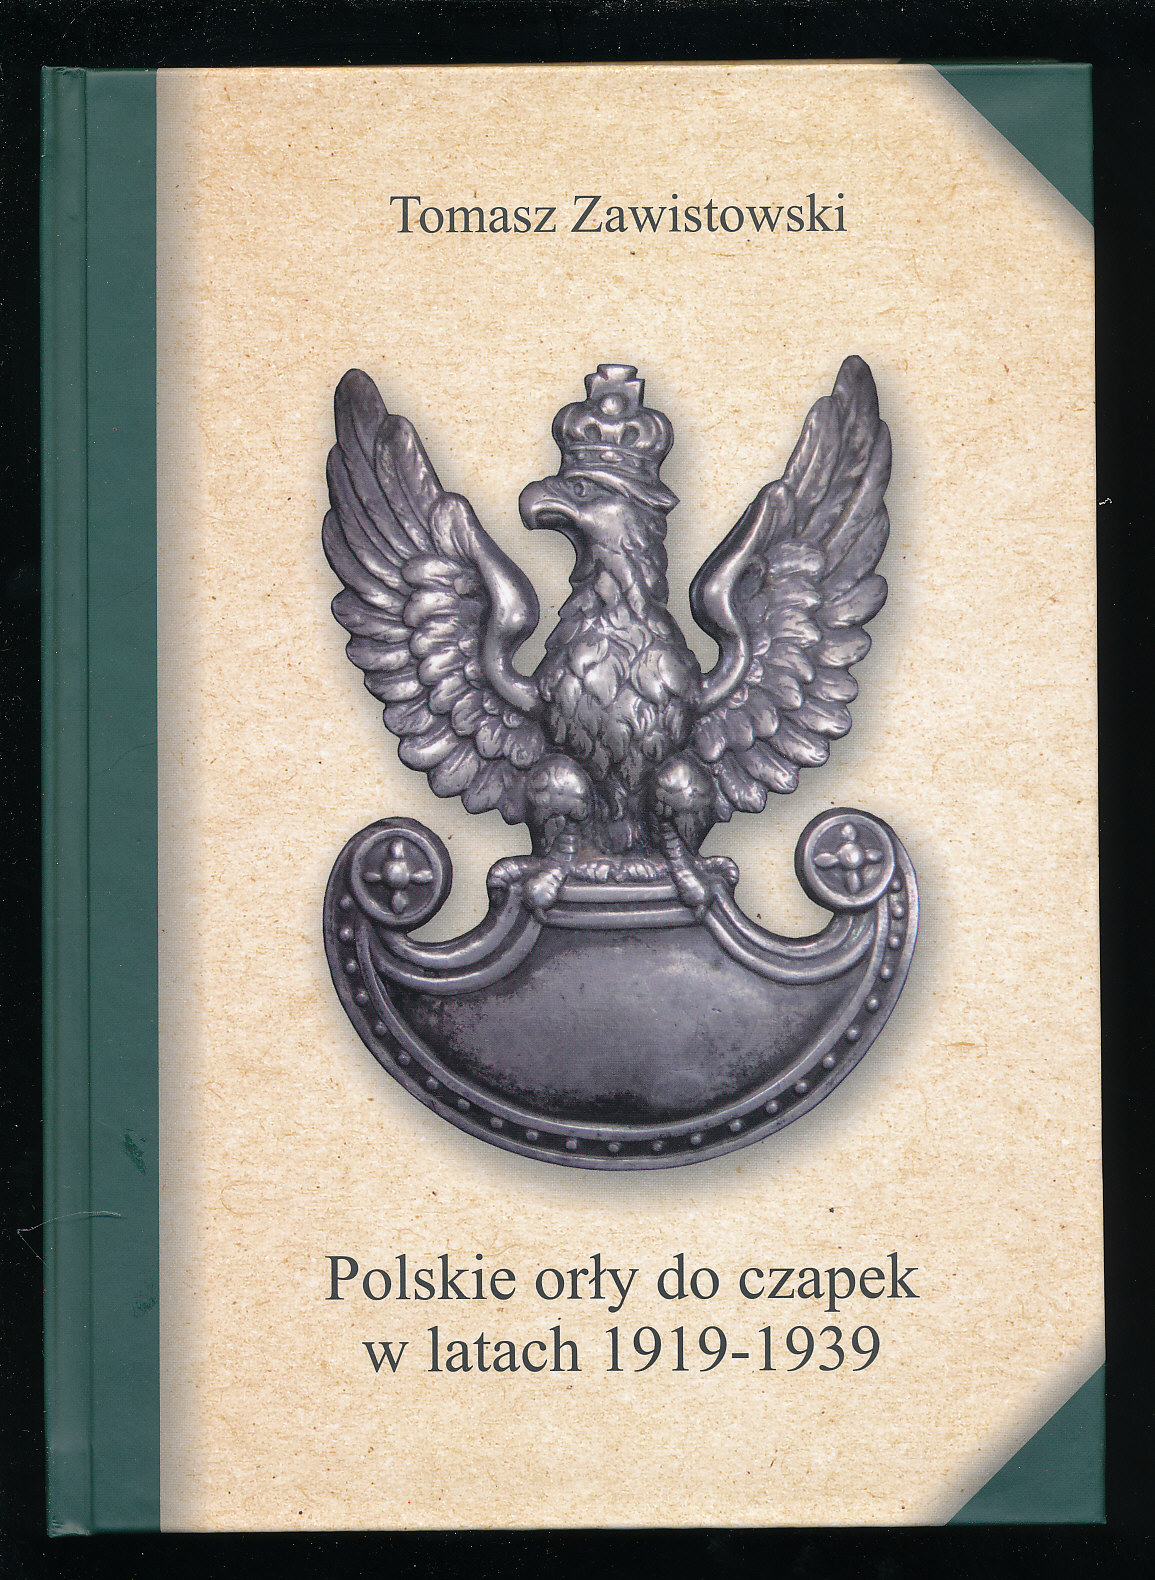 Poľské Eagles do CzaPEK 1919-39 T.Zwistowski (9294